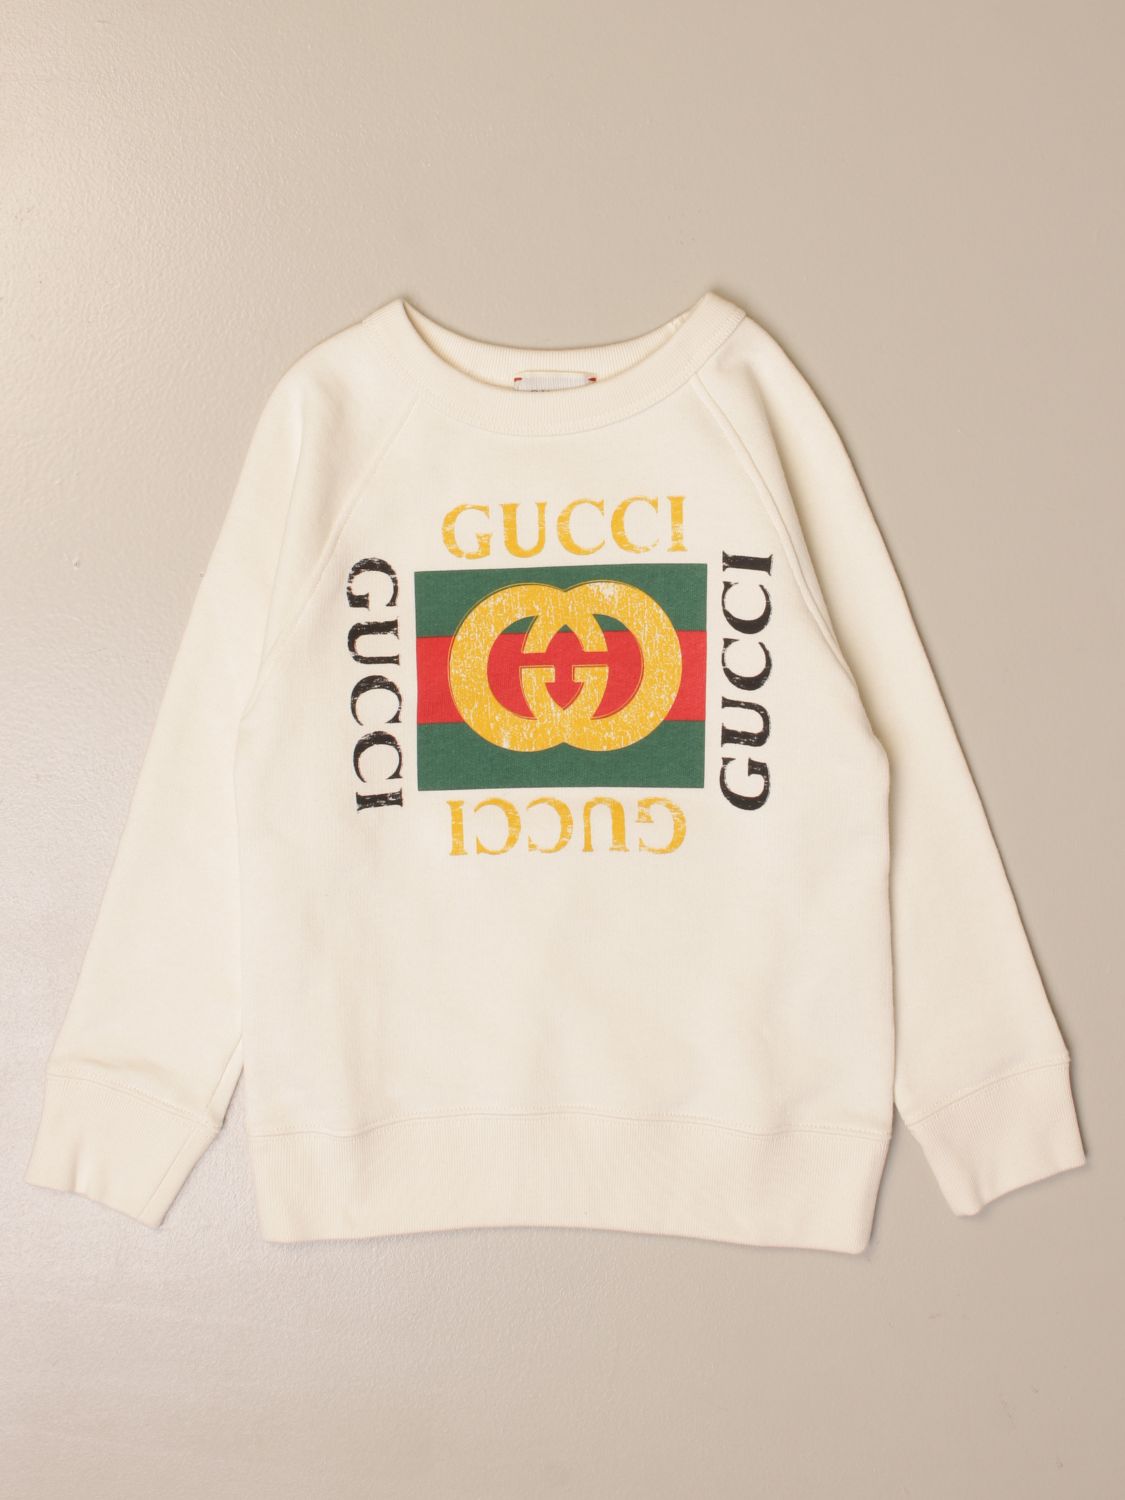 gucci crewneck logo sweatshirt